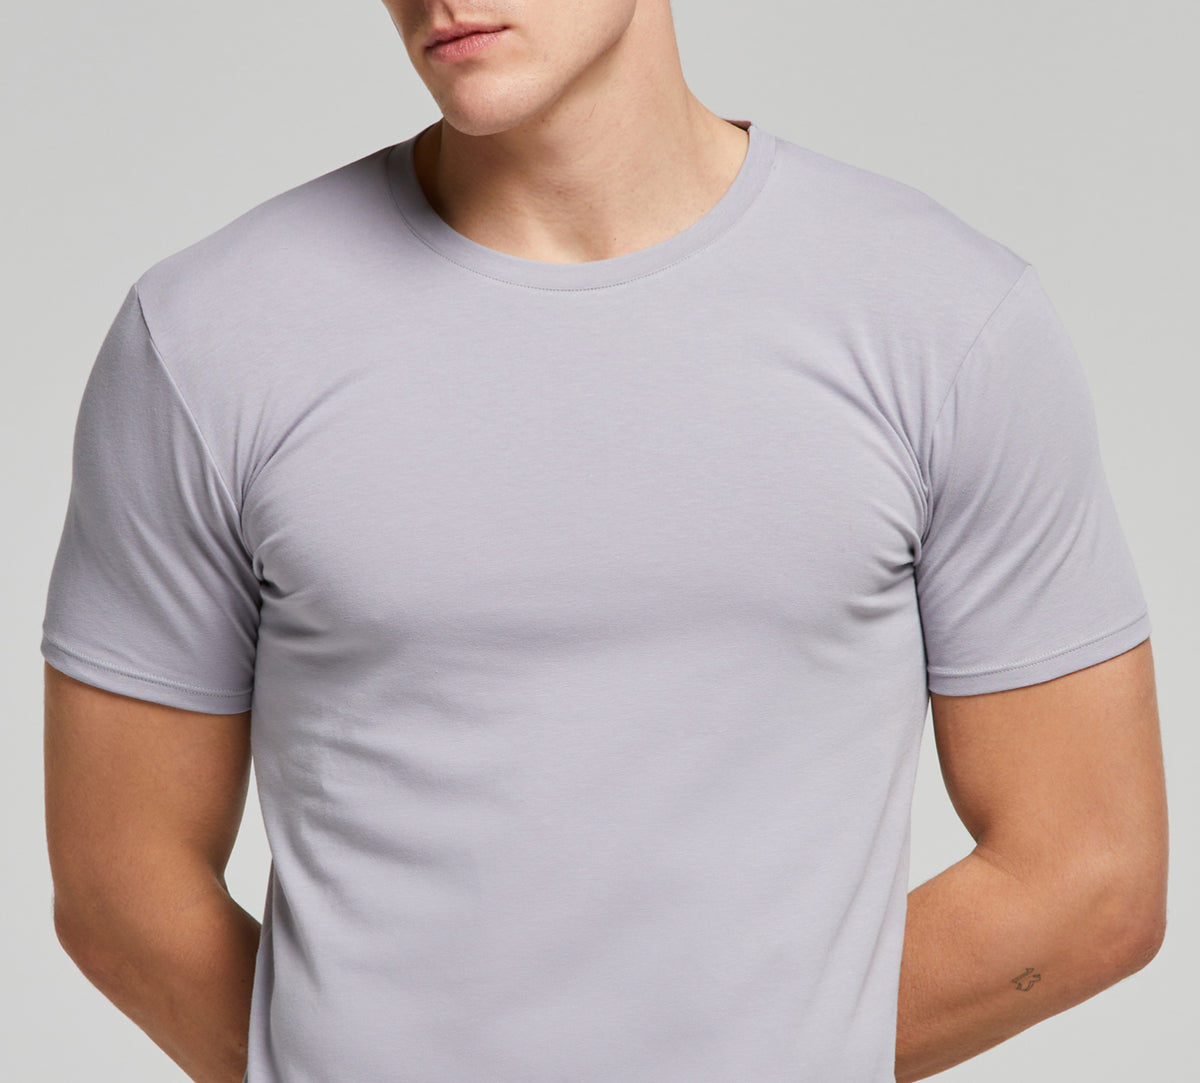 Basic slim fit men's t-shirt